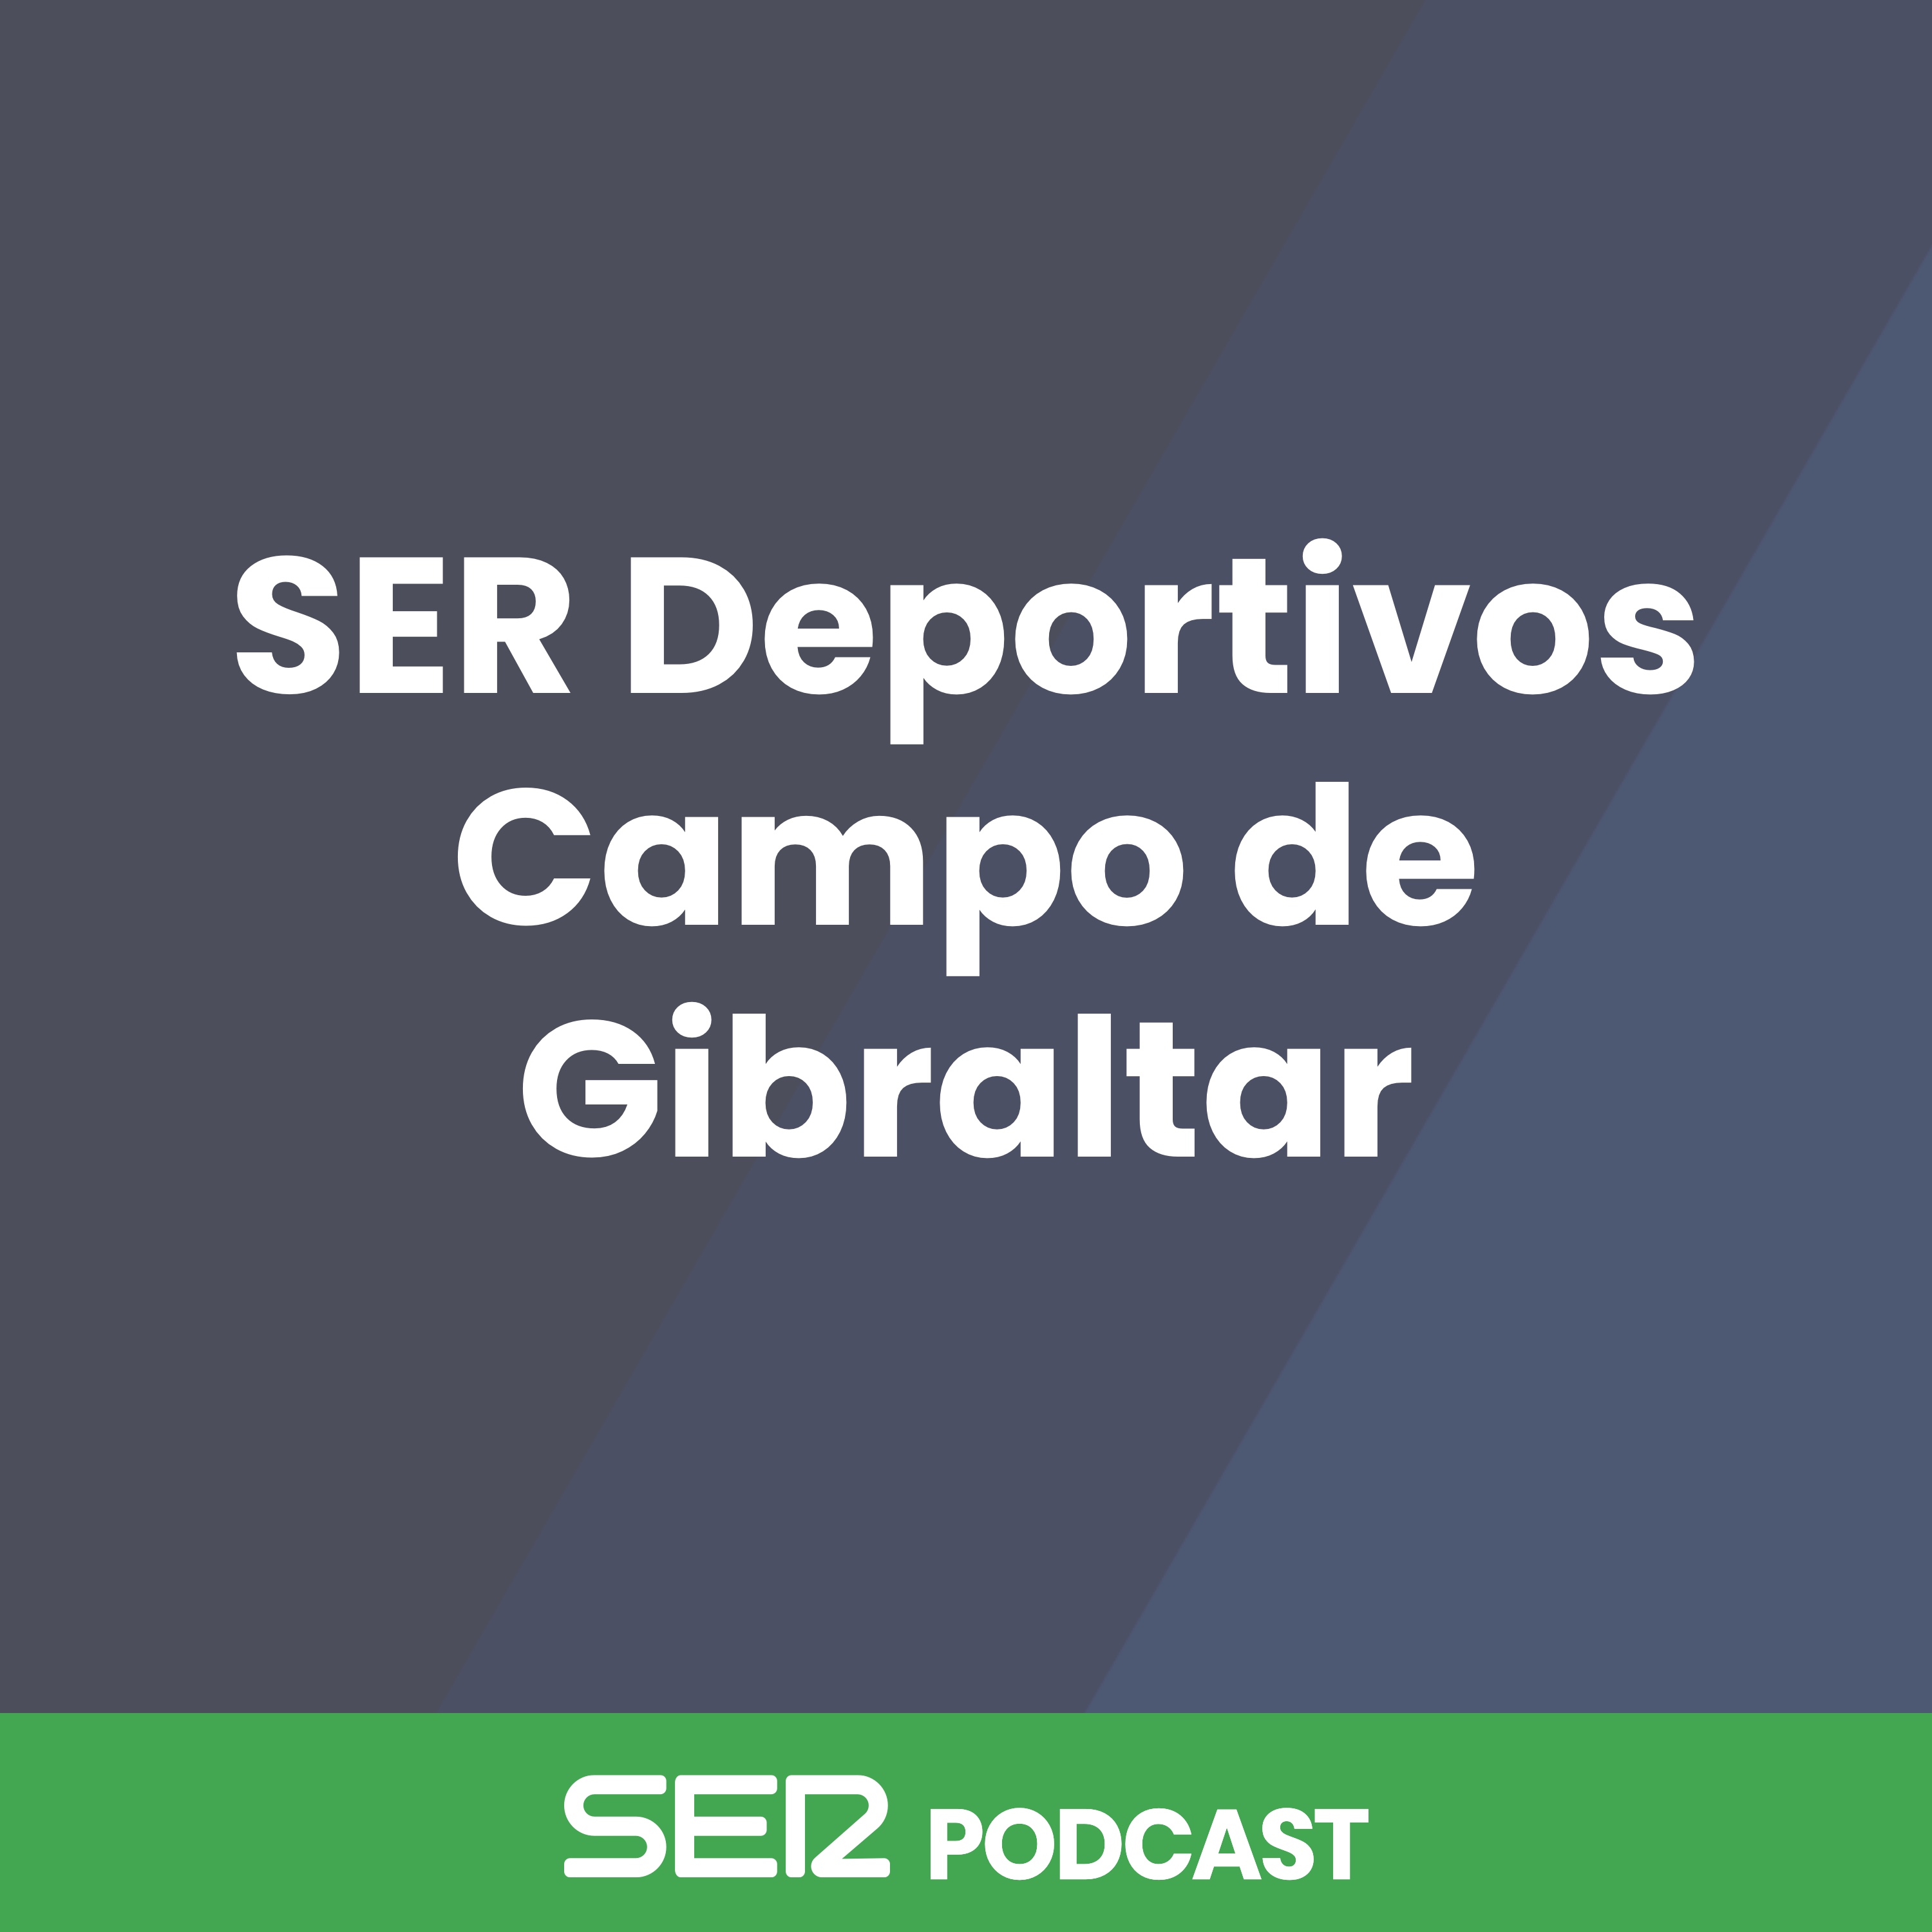 SER Deportivos Campo de Gibraltar